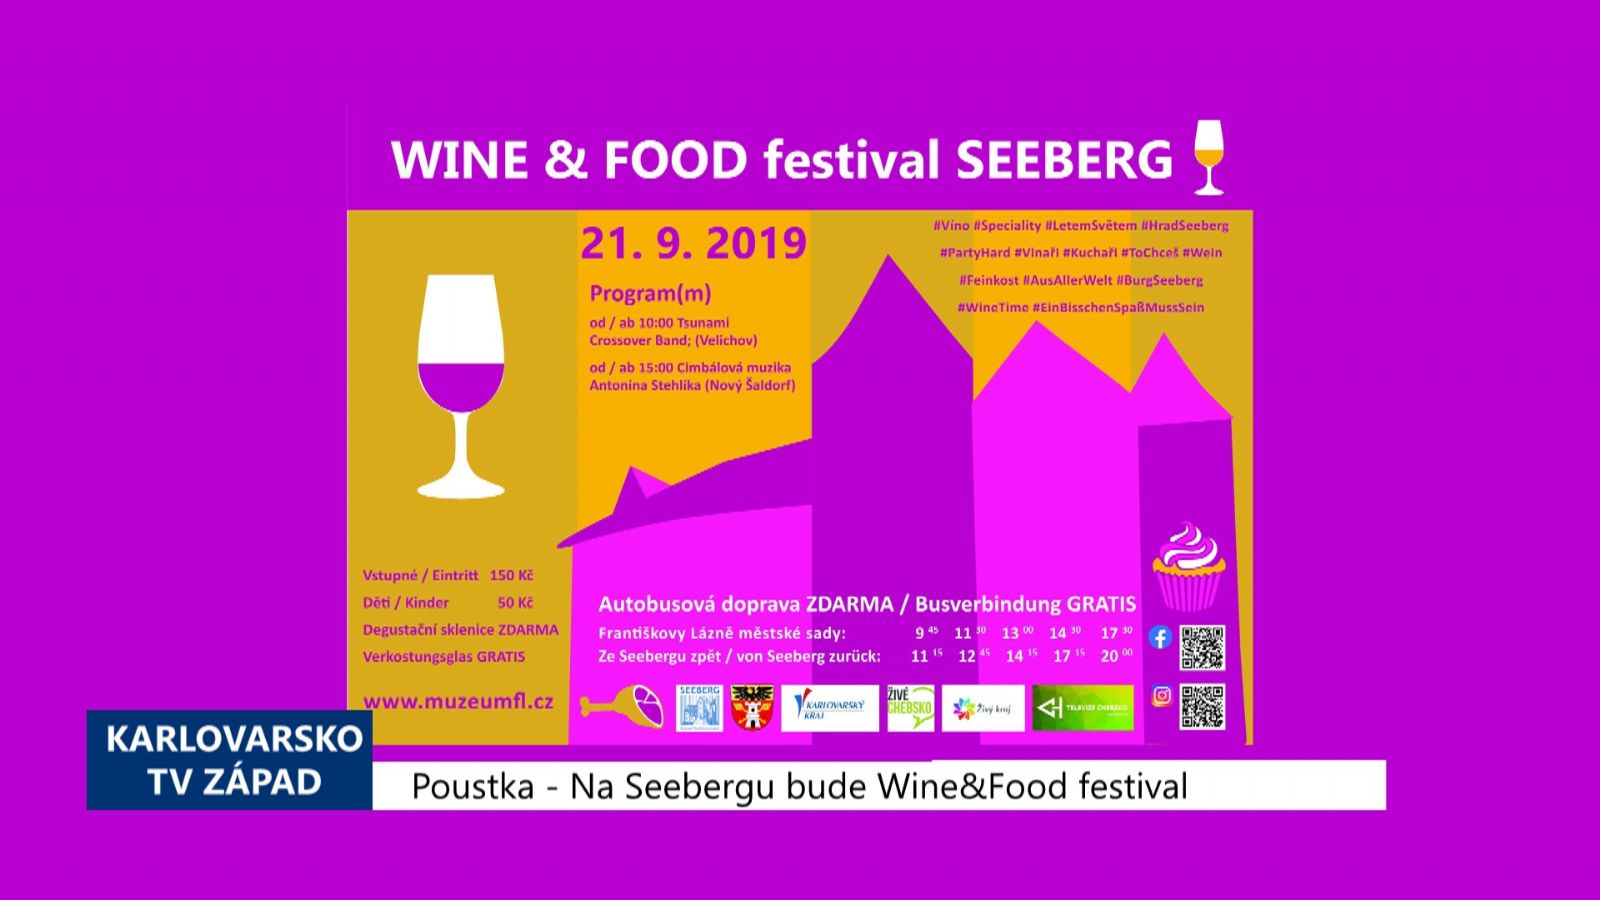 Poustka: Na Seebergu bude Wine&Food festival (TV Západ)